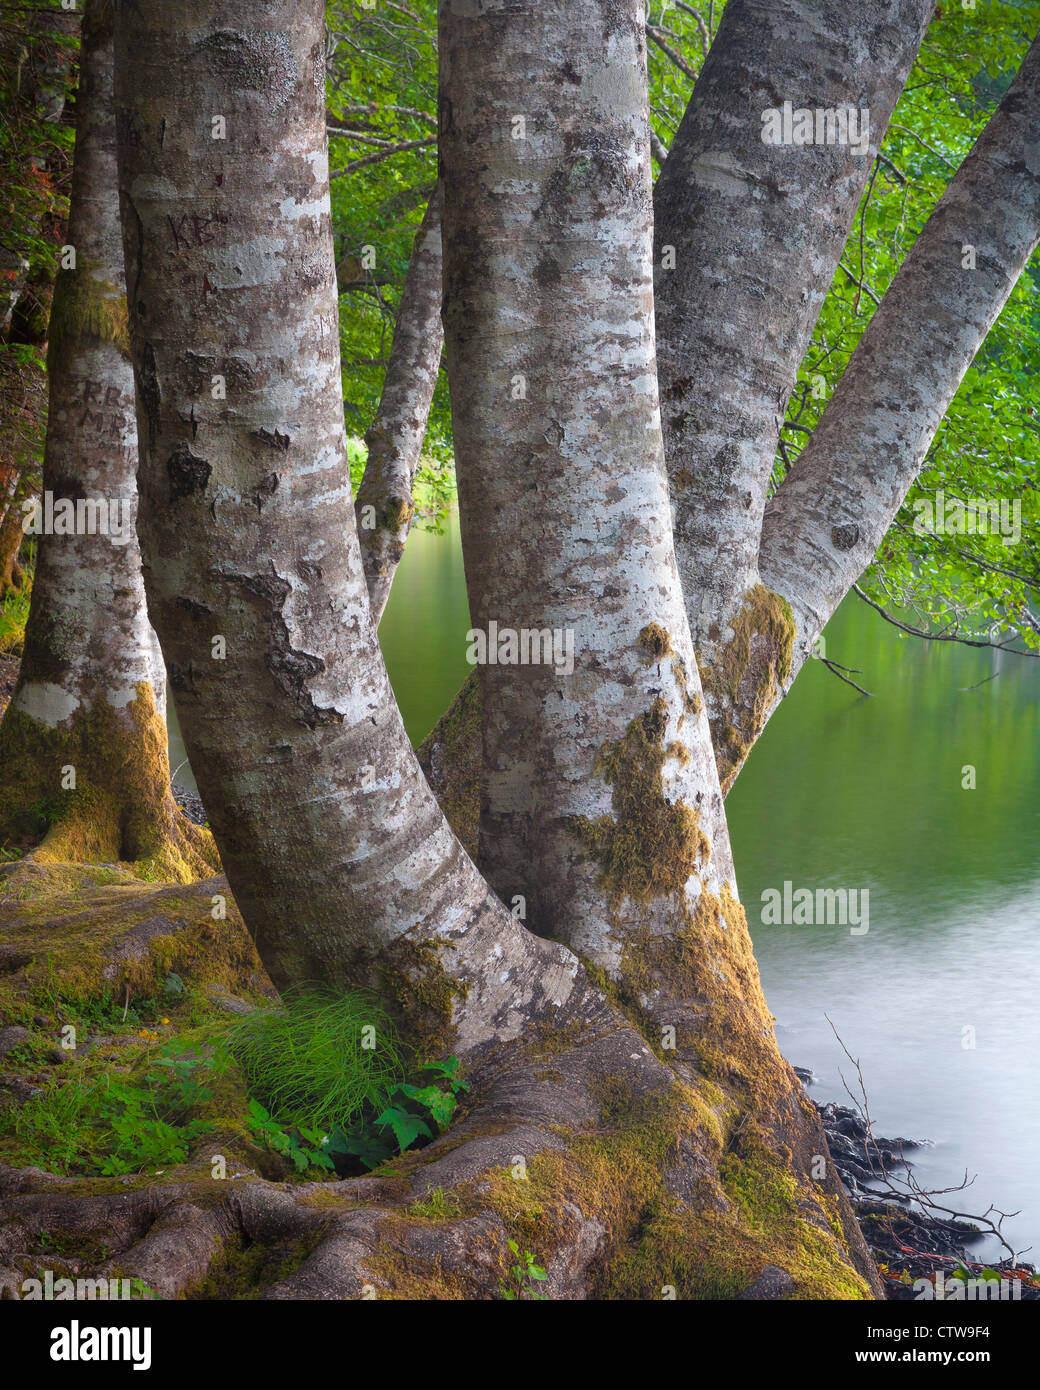 Olympic National Park, Washington: Red alder (Alnus rubra) trunks on the shore of Lake Crescent on the Olympic Peninsula Stock Photo